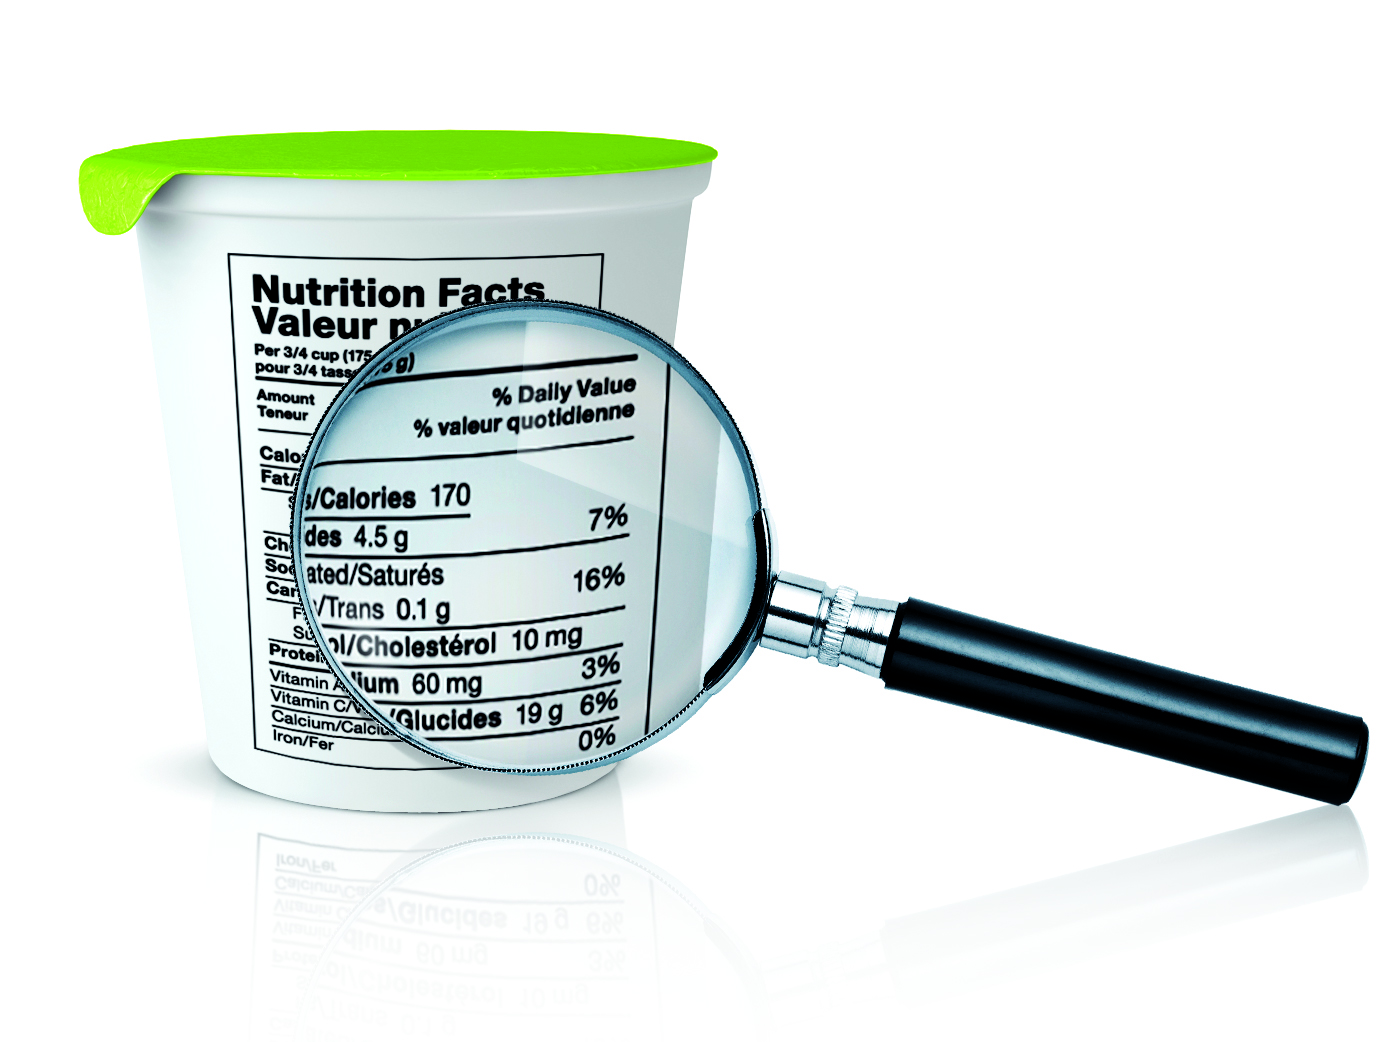 Understanding the nutrition label